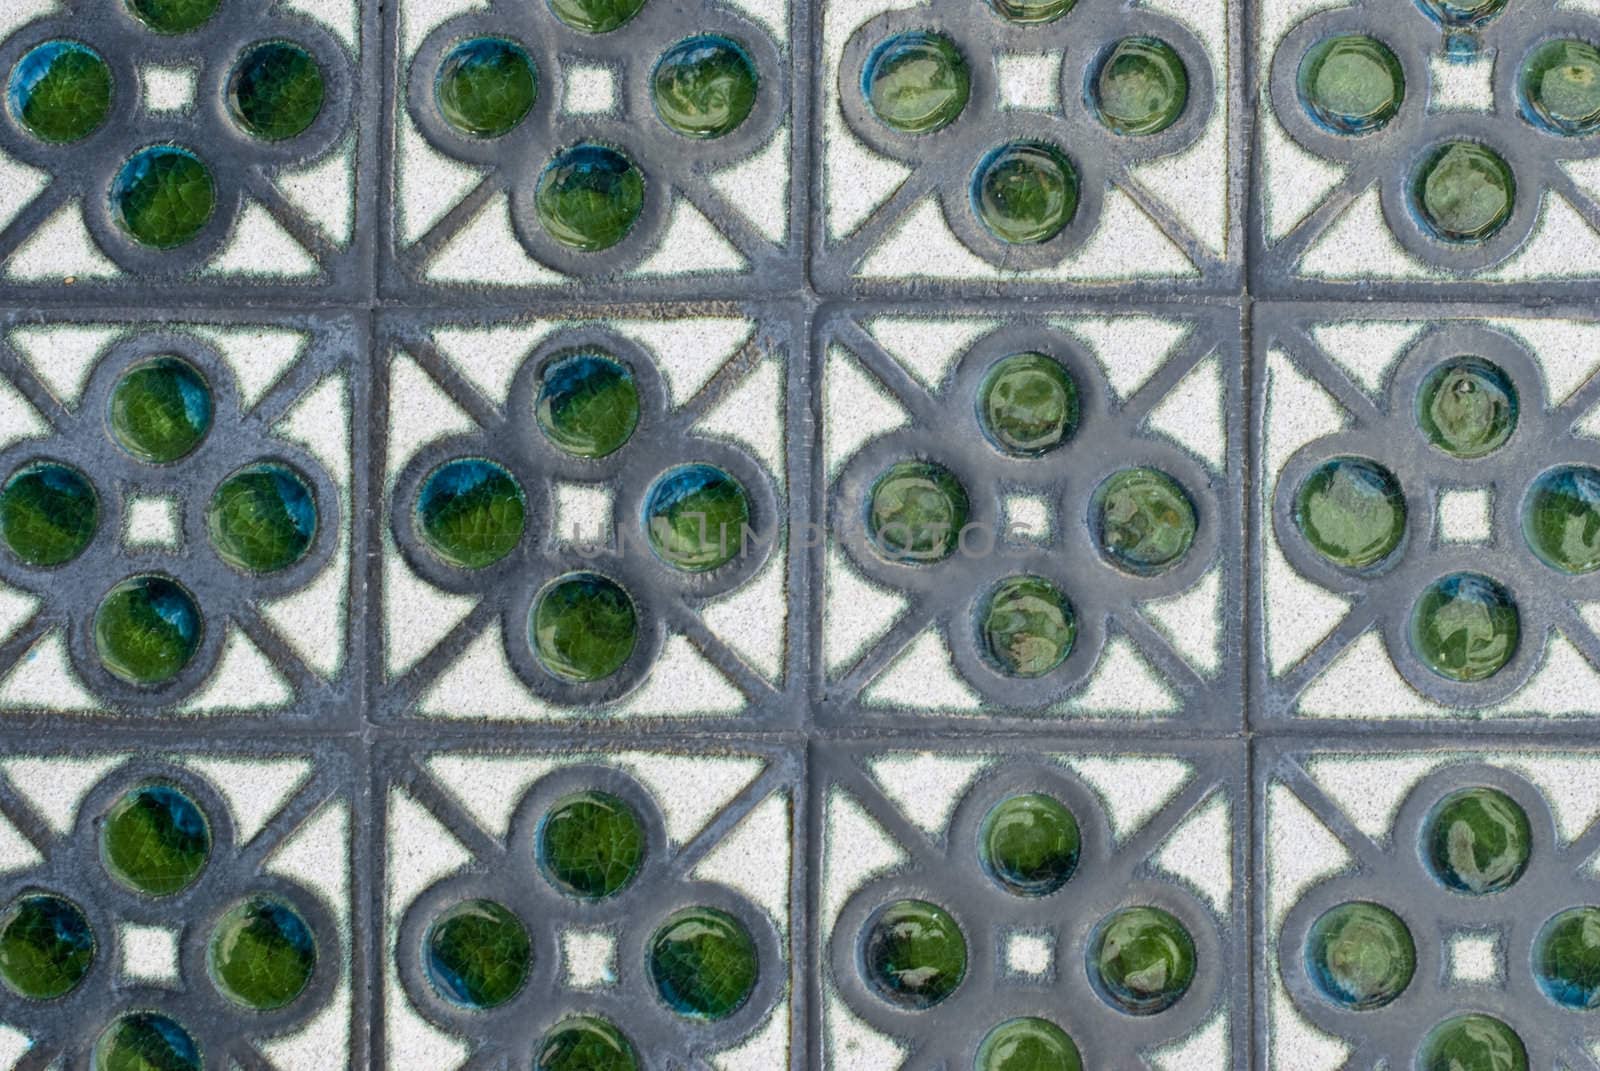 Detail of Portuguese glazed tiles.